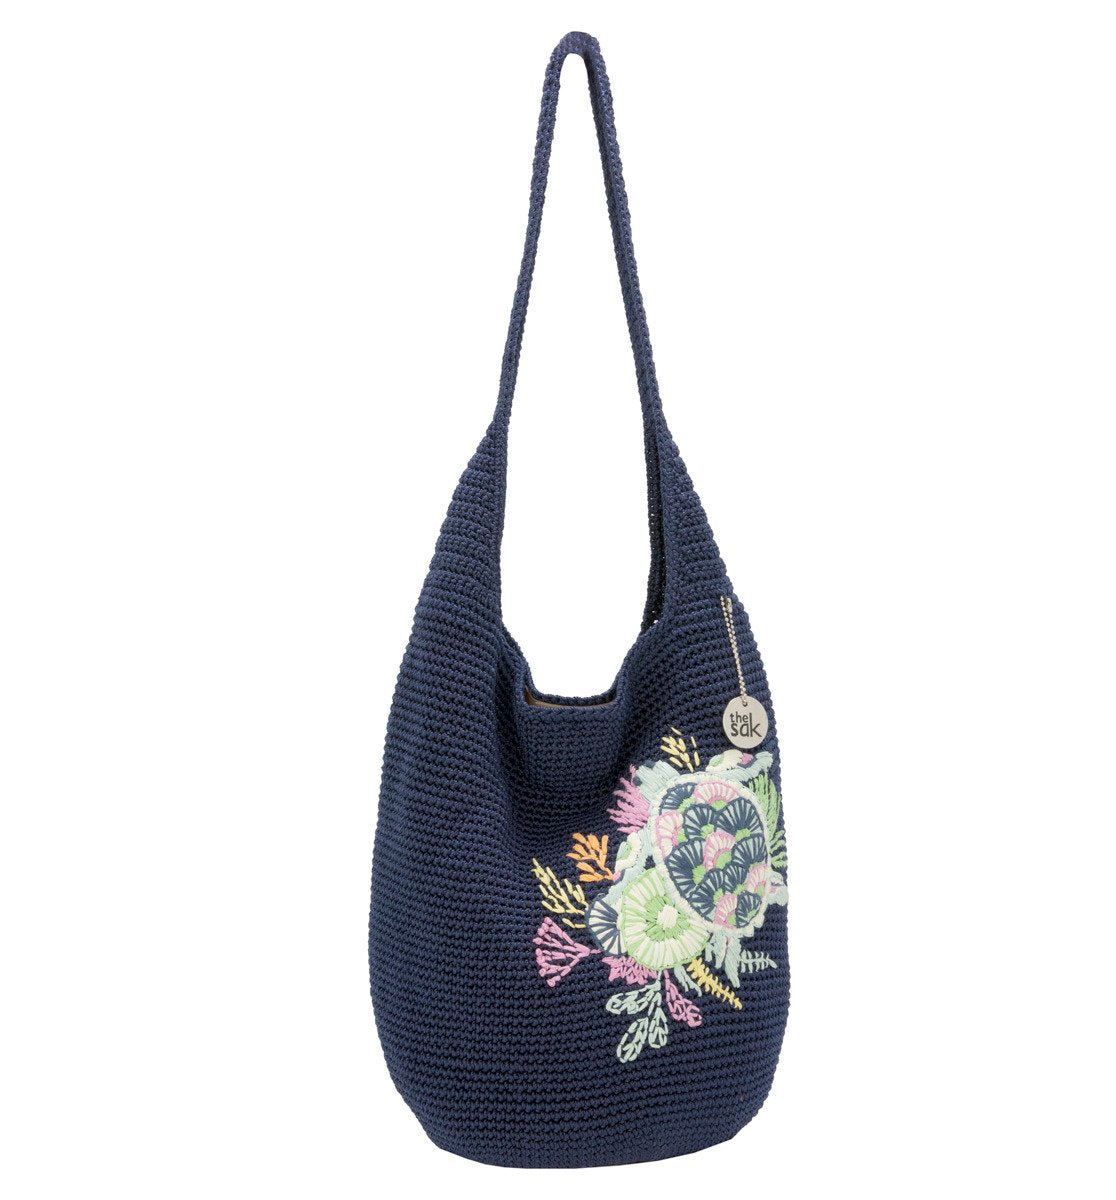 The Sak Crochet Handbags Only $21.99 on Zulily (Regularly $90)